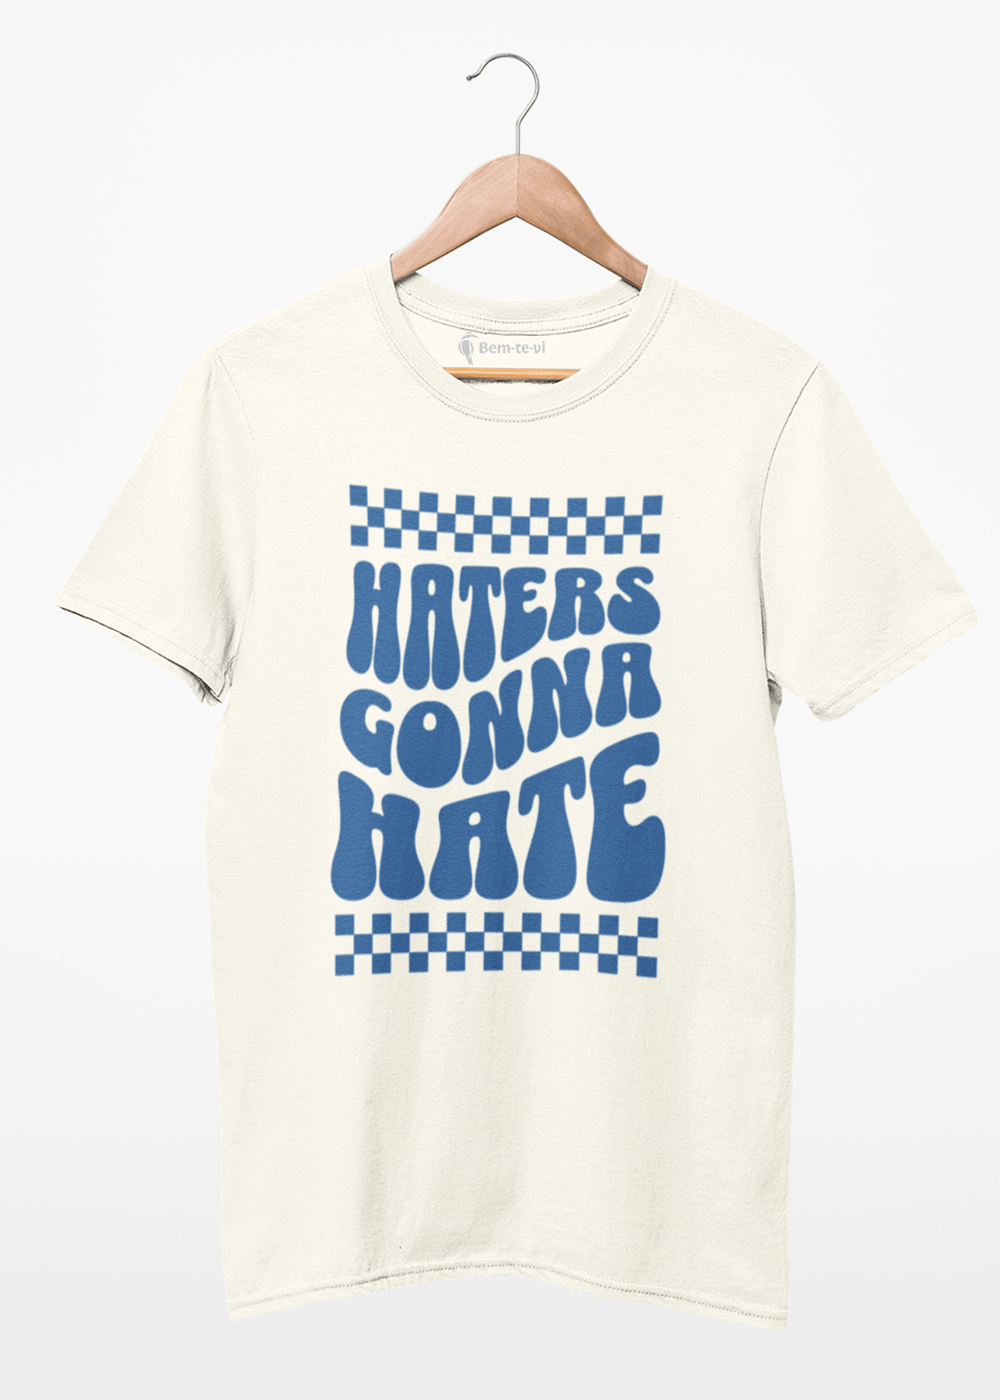 Camiseta haters gonna hate 